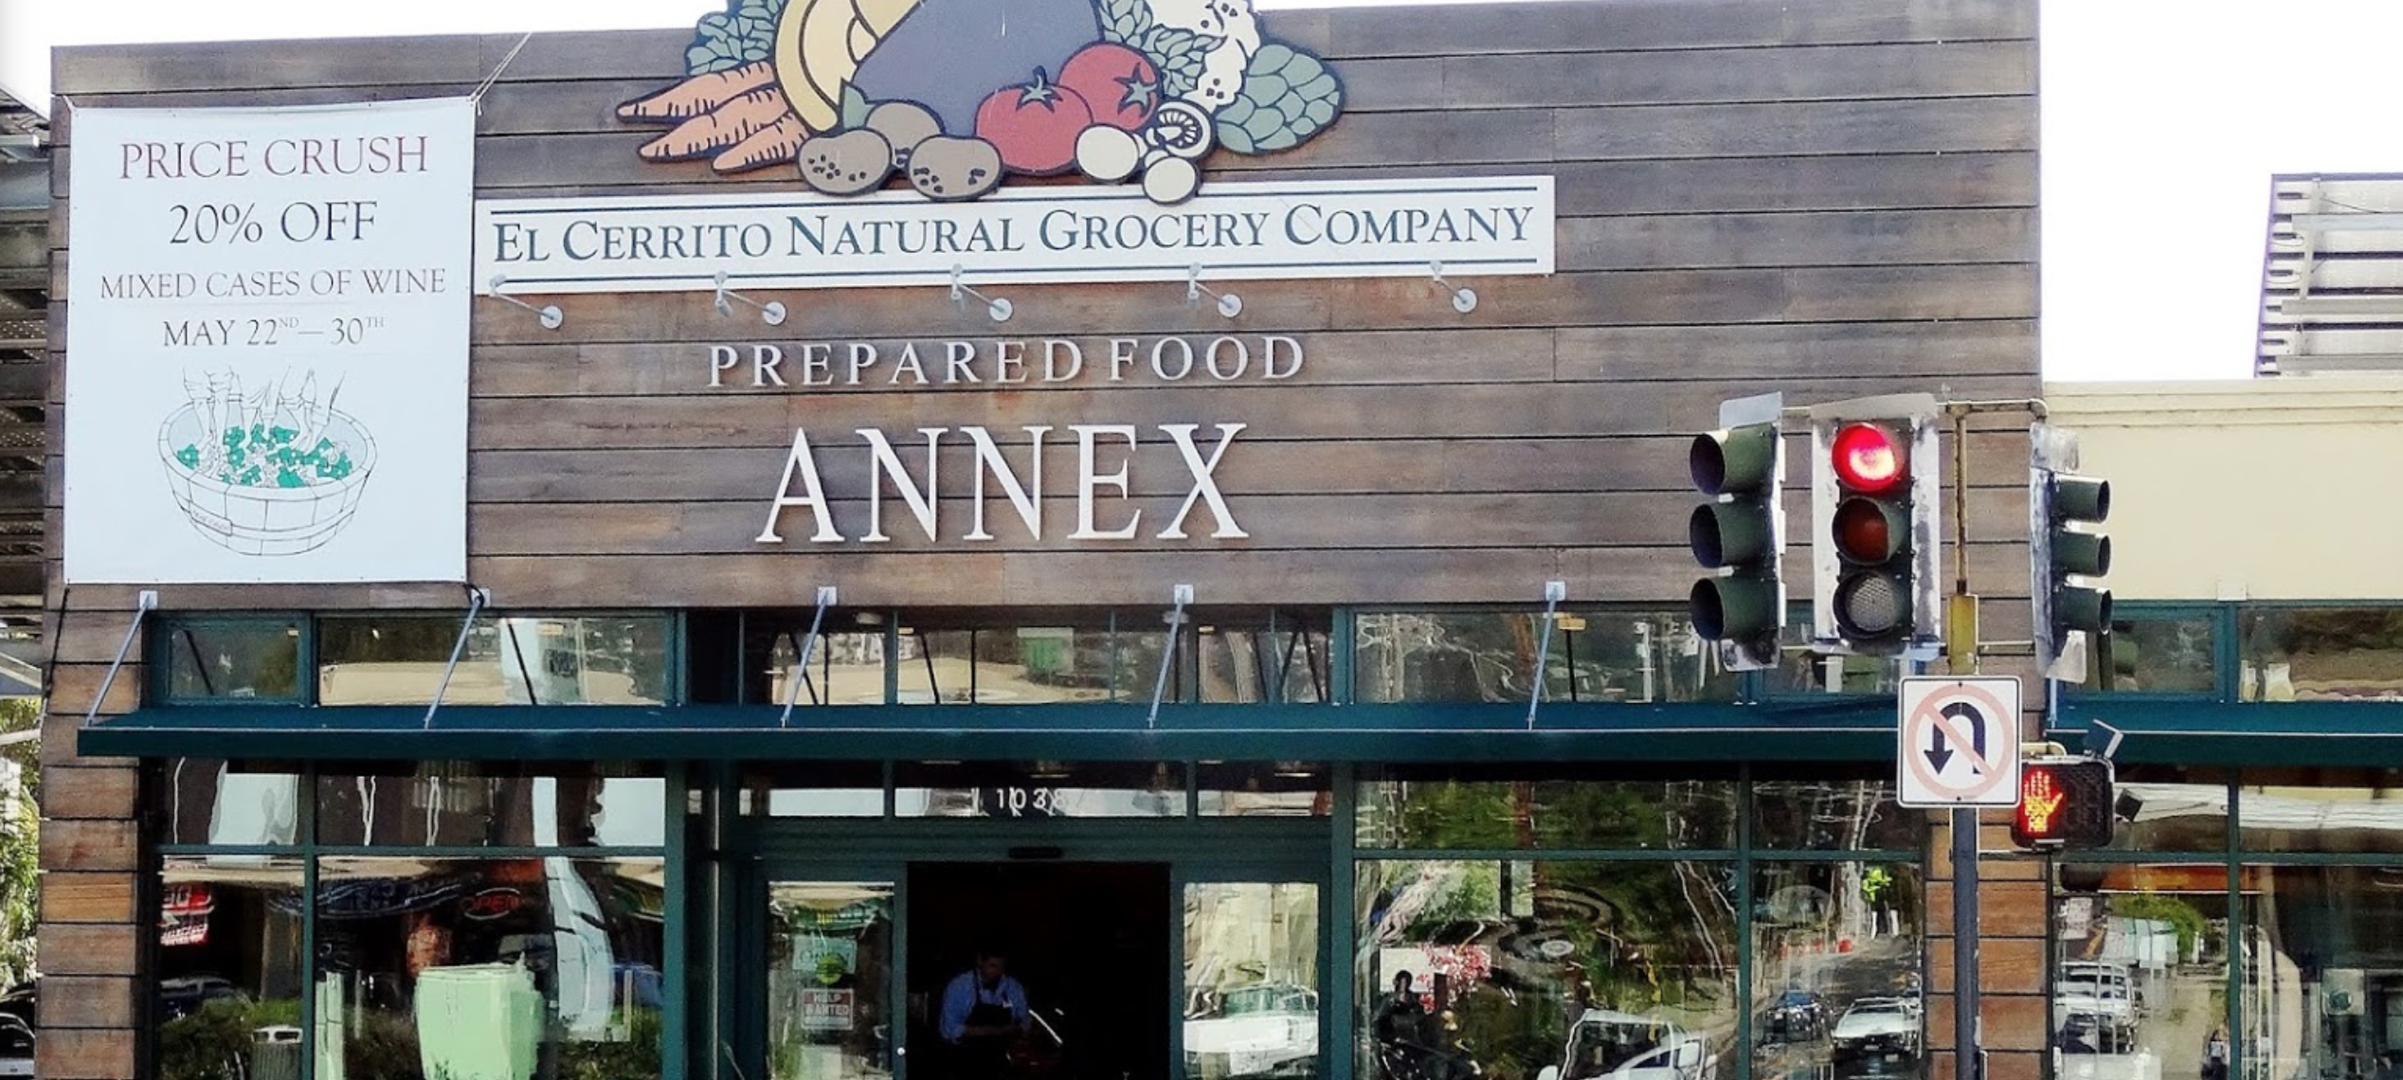 El Cerrito Natural Grocery Annex